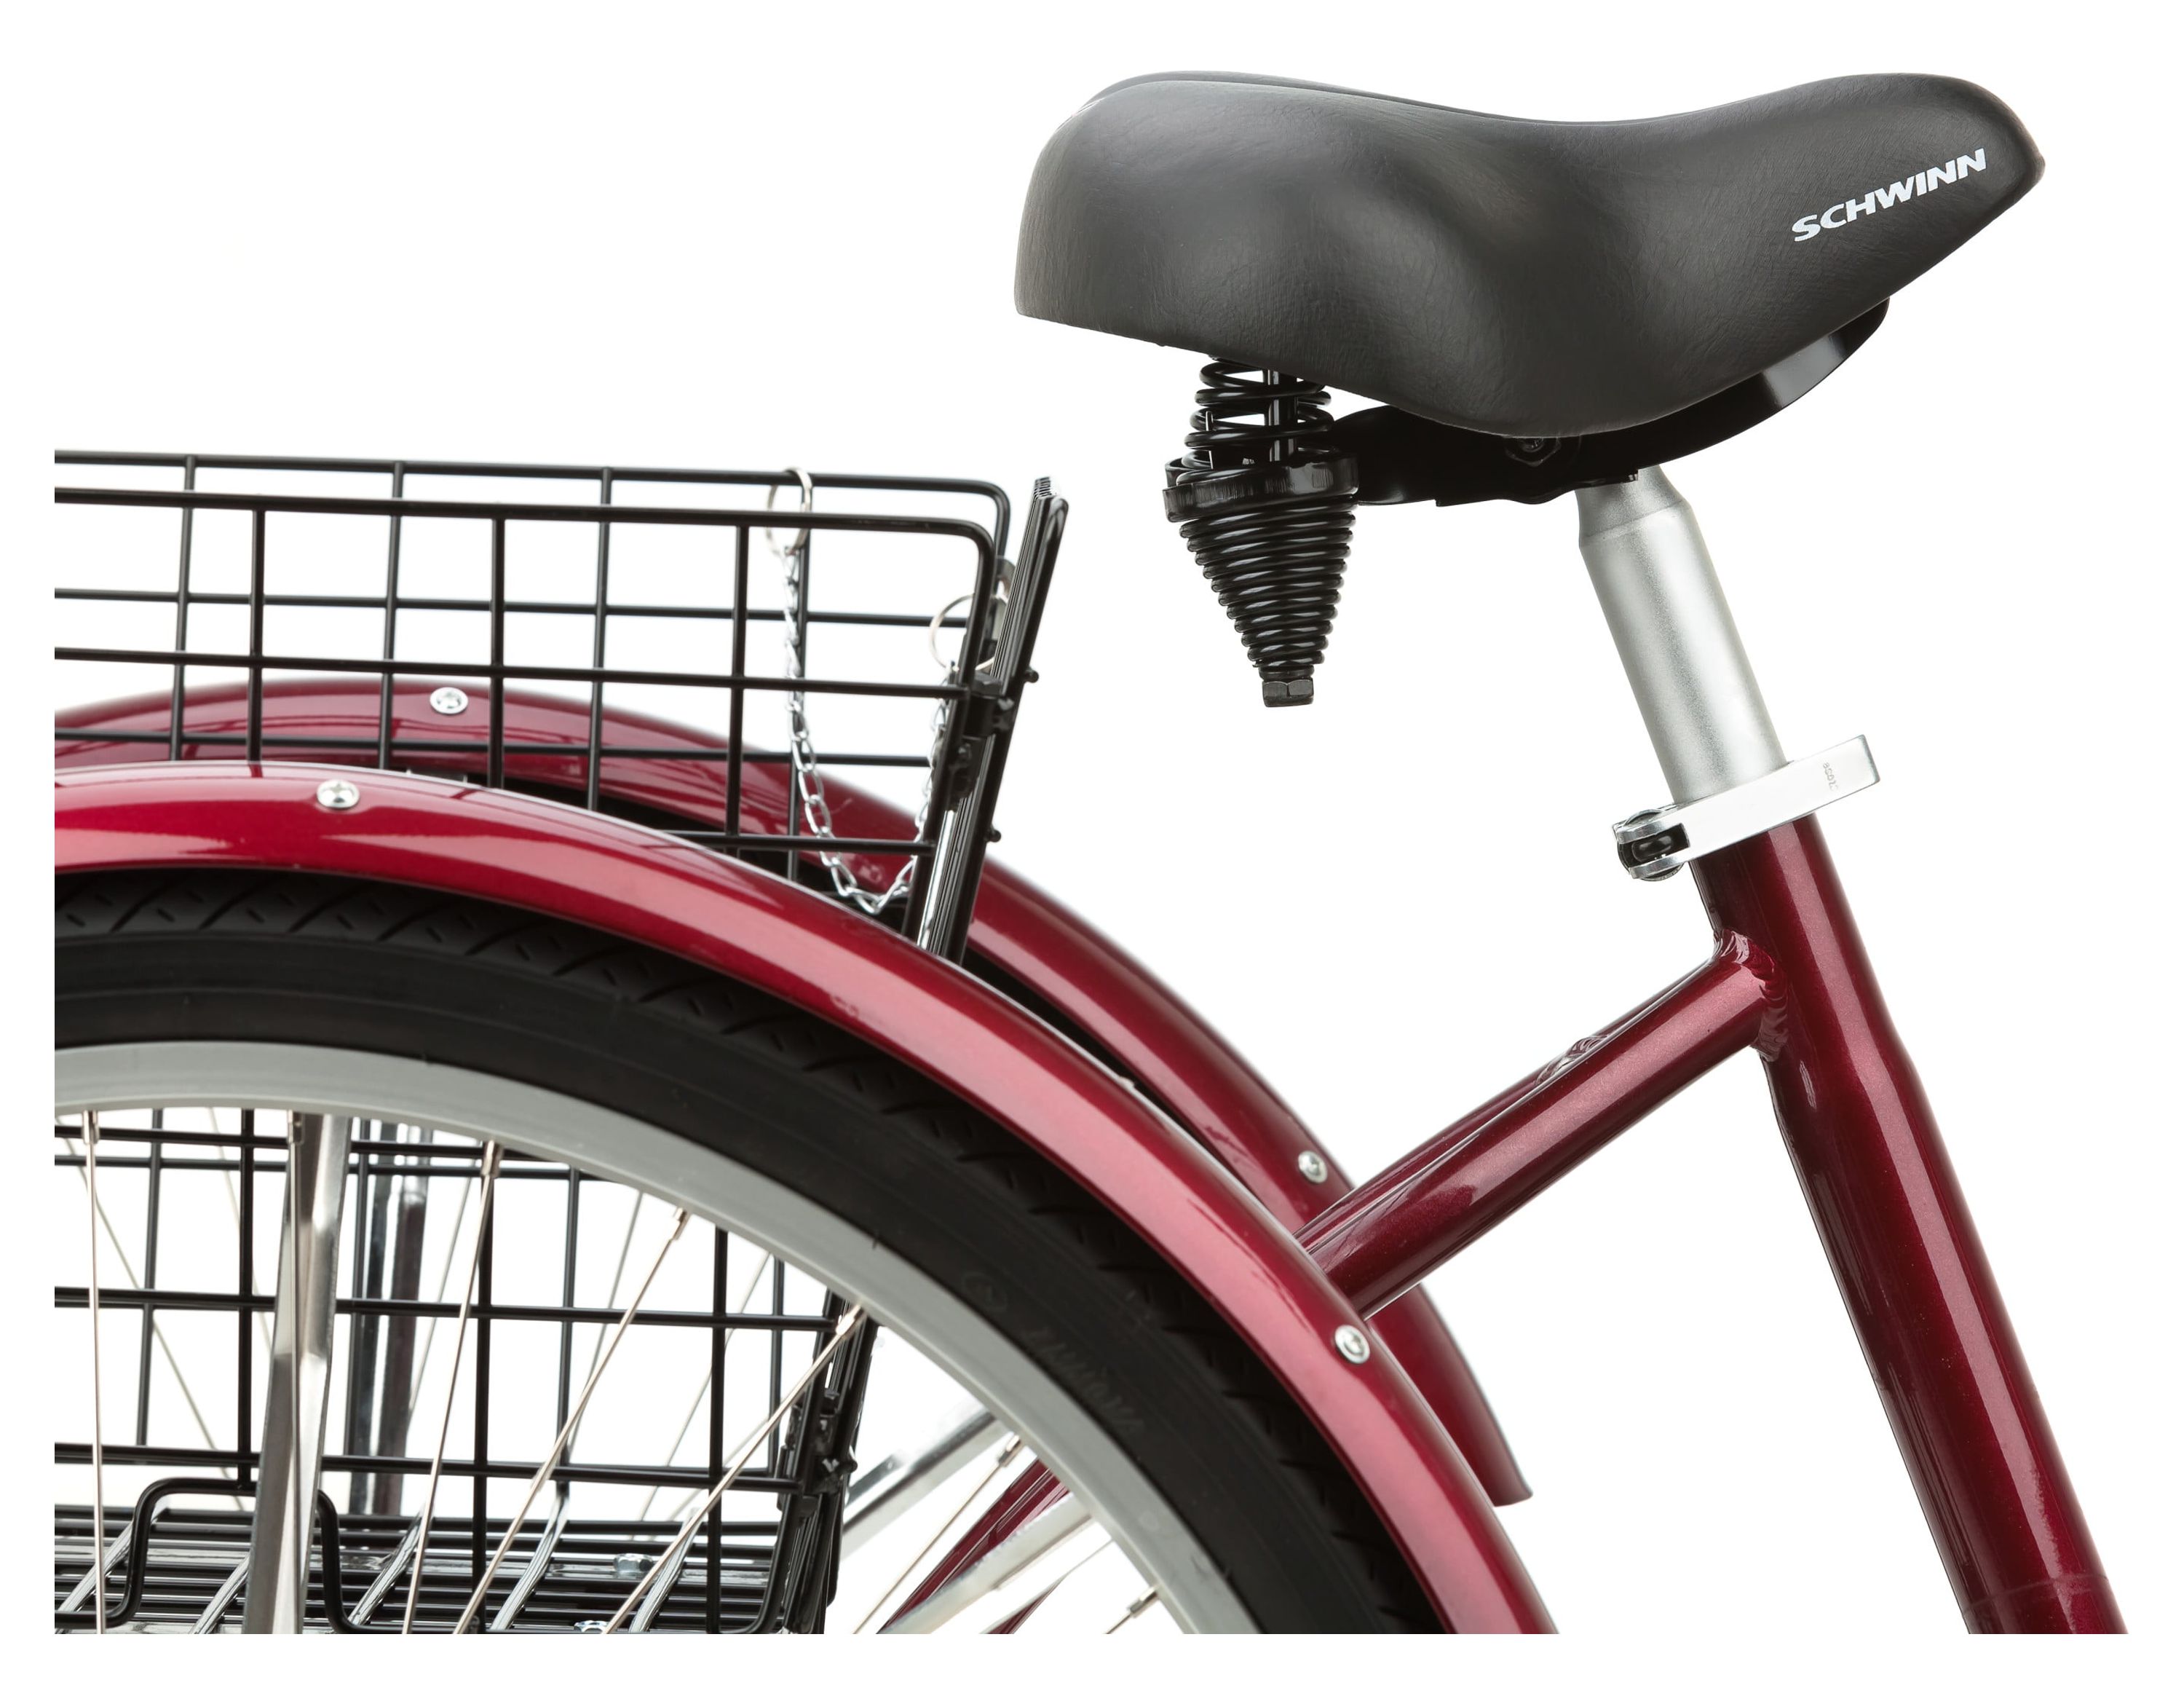 Schwinn Meridian Adult Tricycle, 26-inch wheels, rear storage basket, Cherry - image 2 of 6